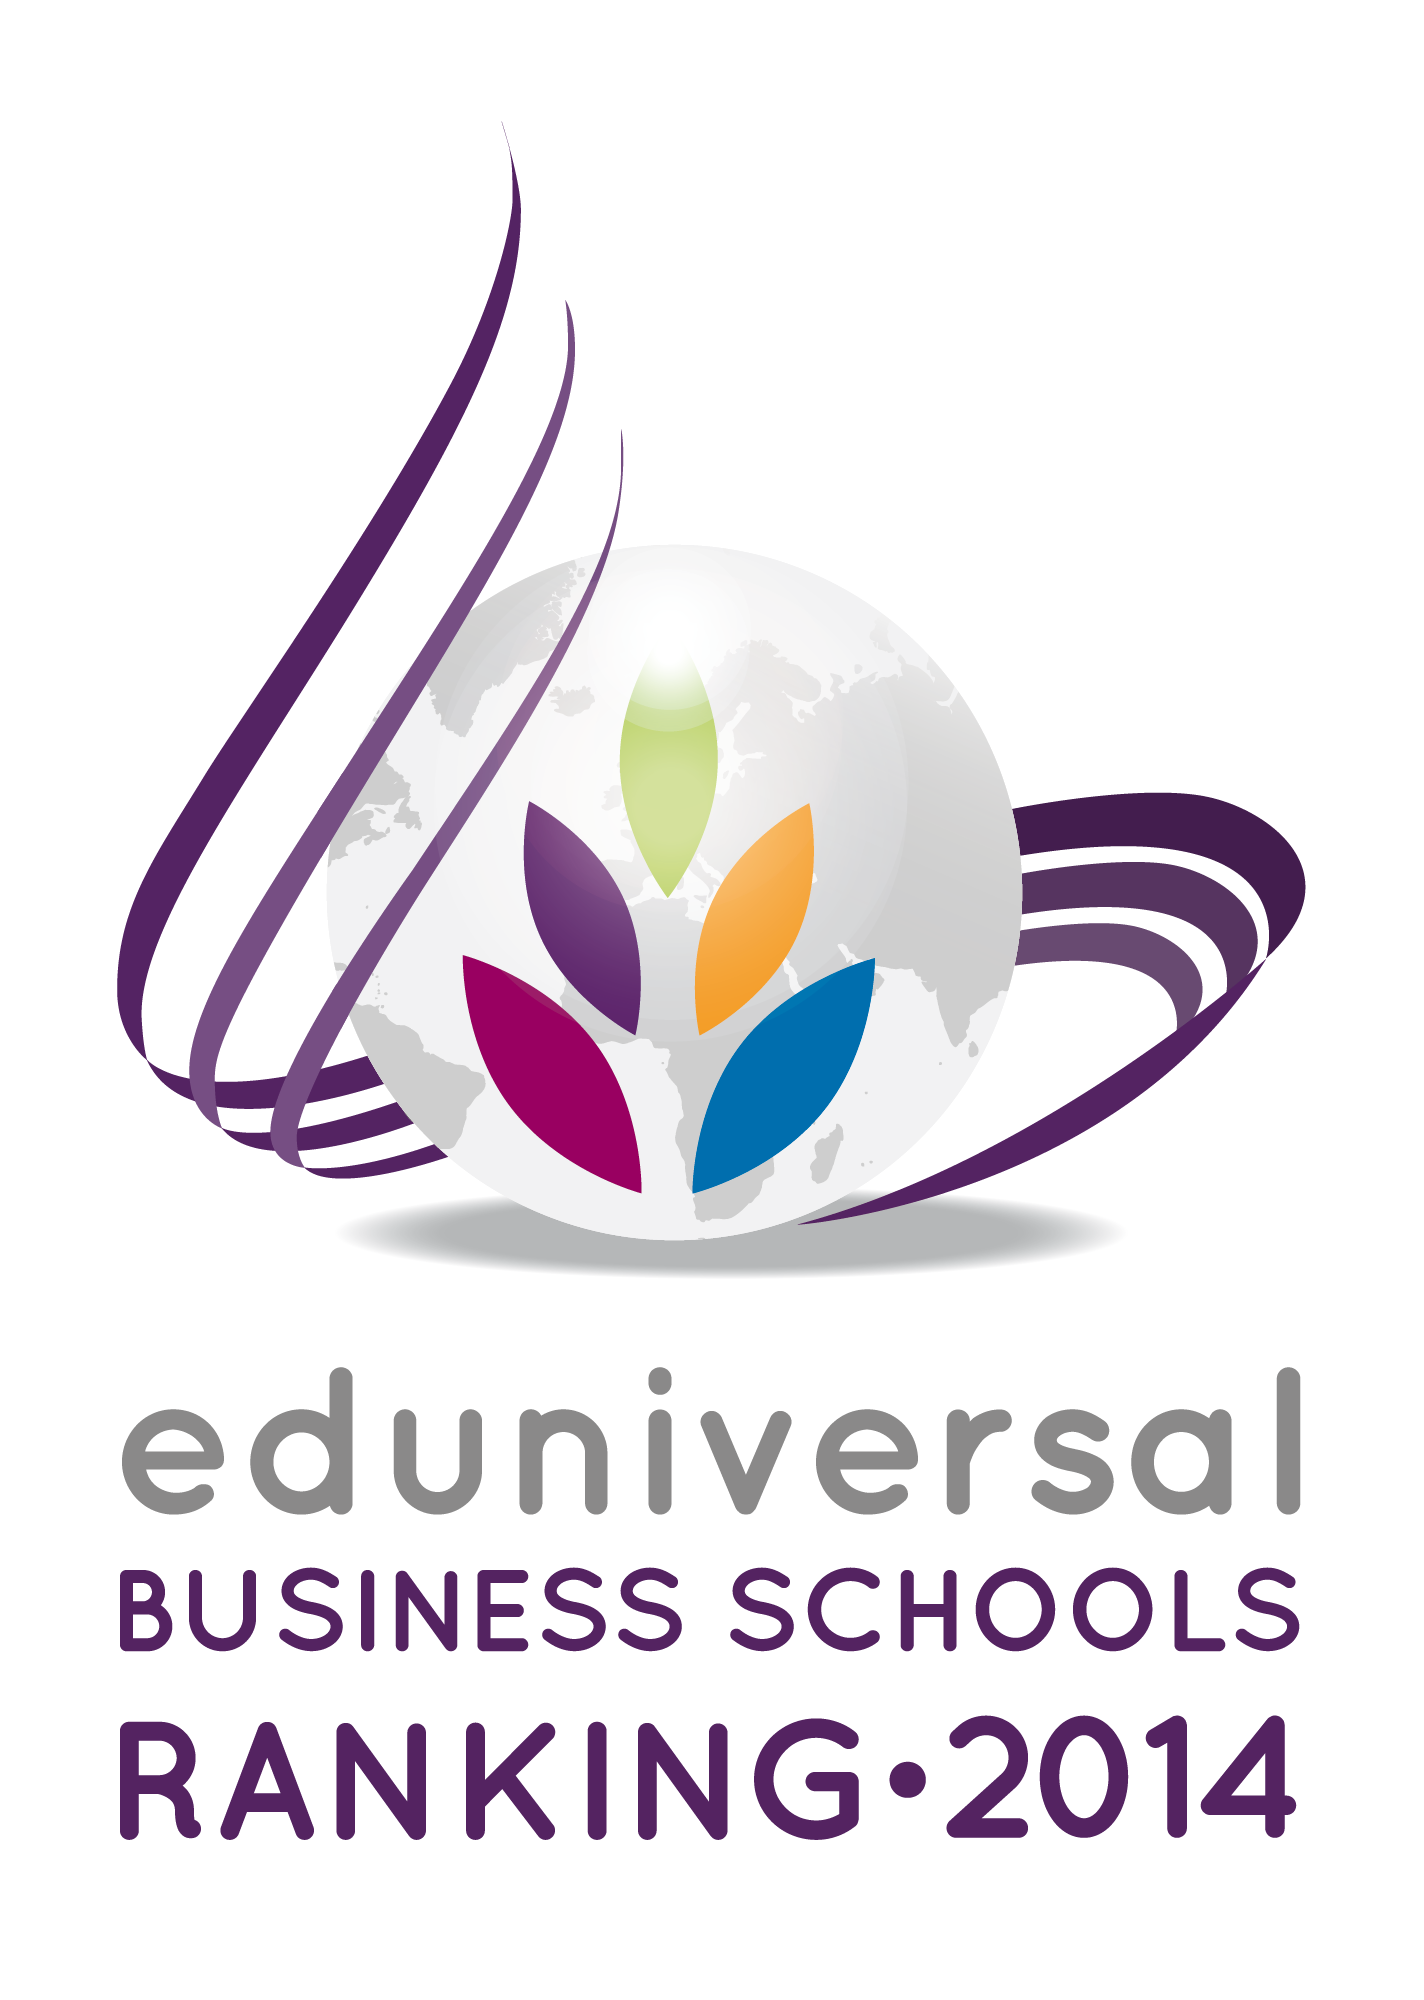 eduniversal_logo_business_schools_ranking.png